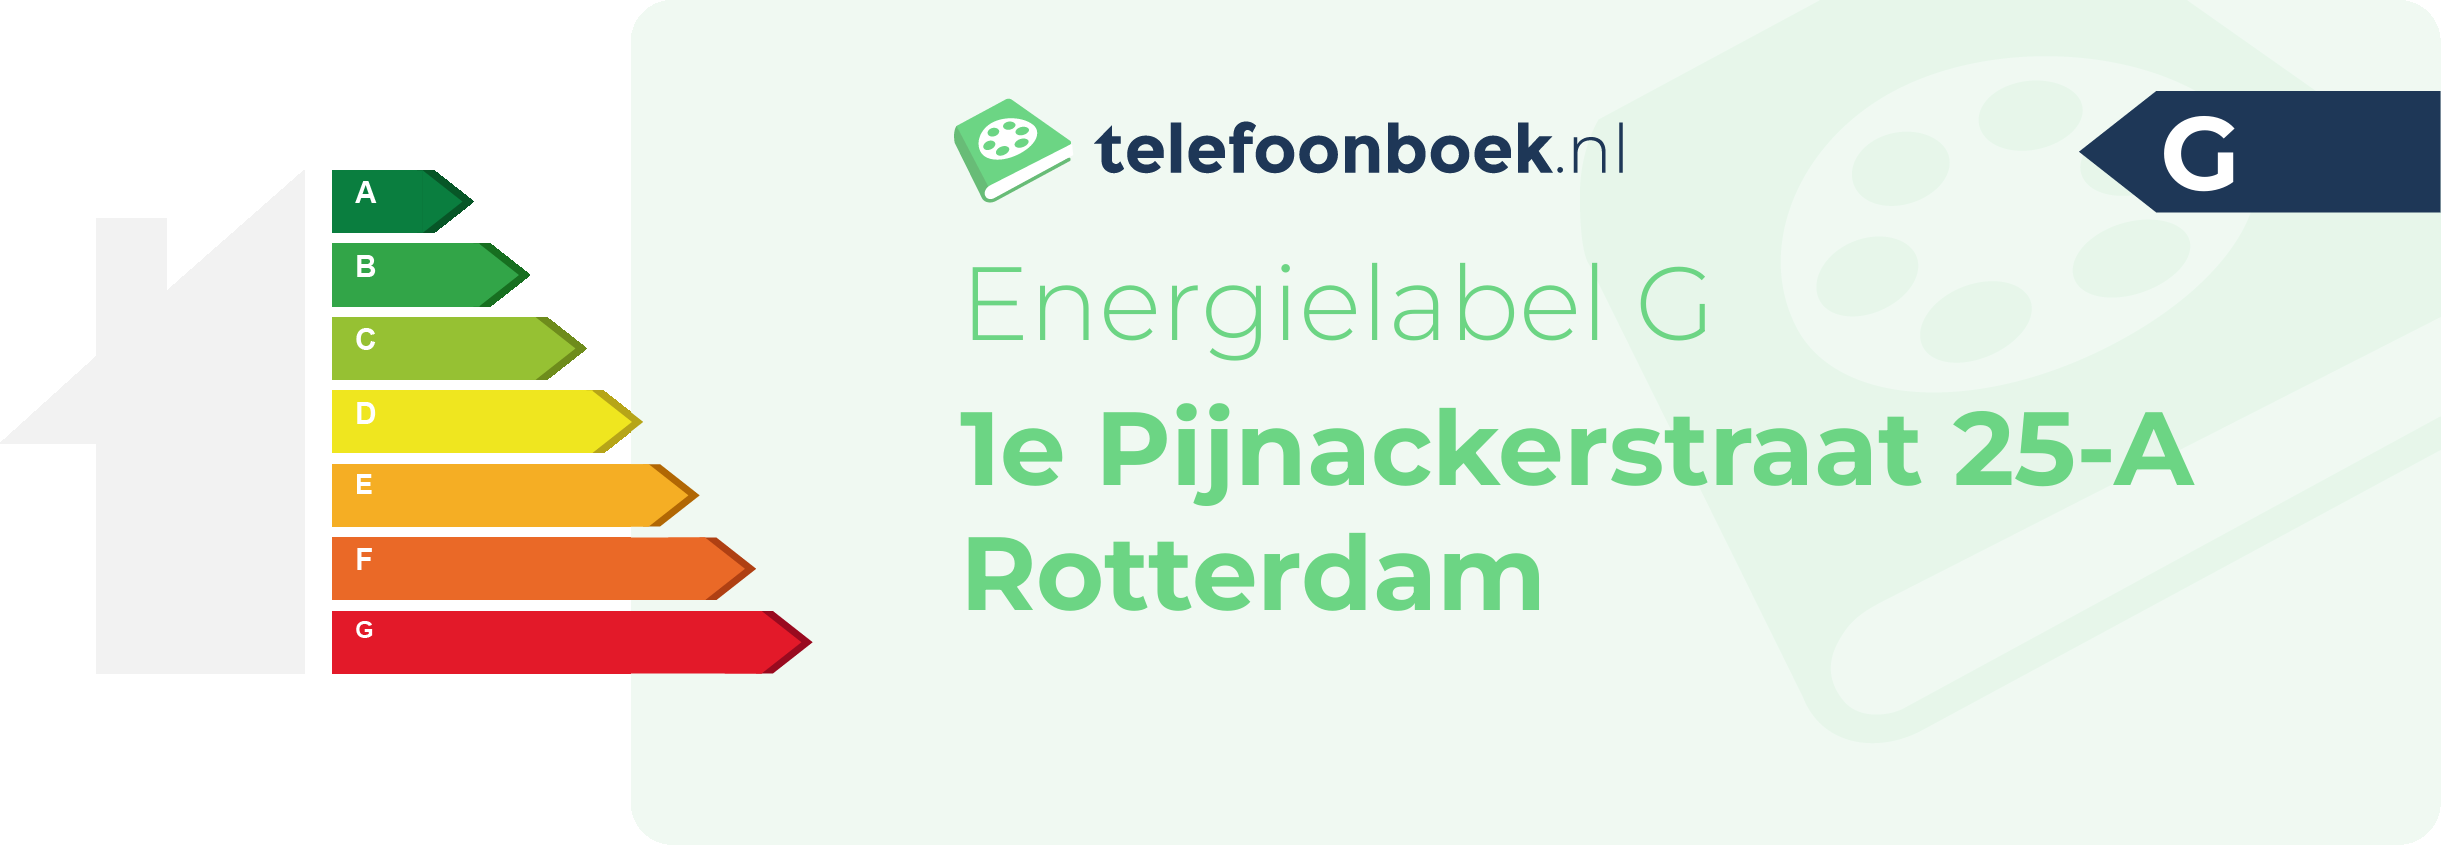 Energielabel 1e Pijnackerstraat 25-A Rotterdam